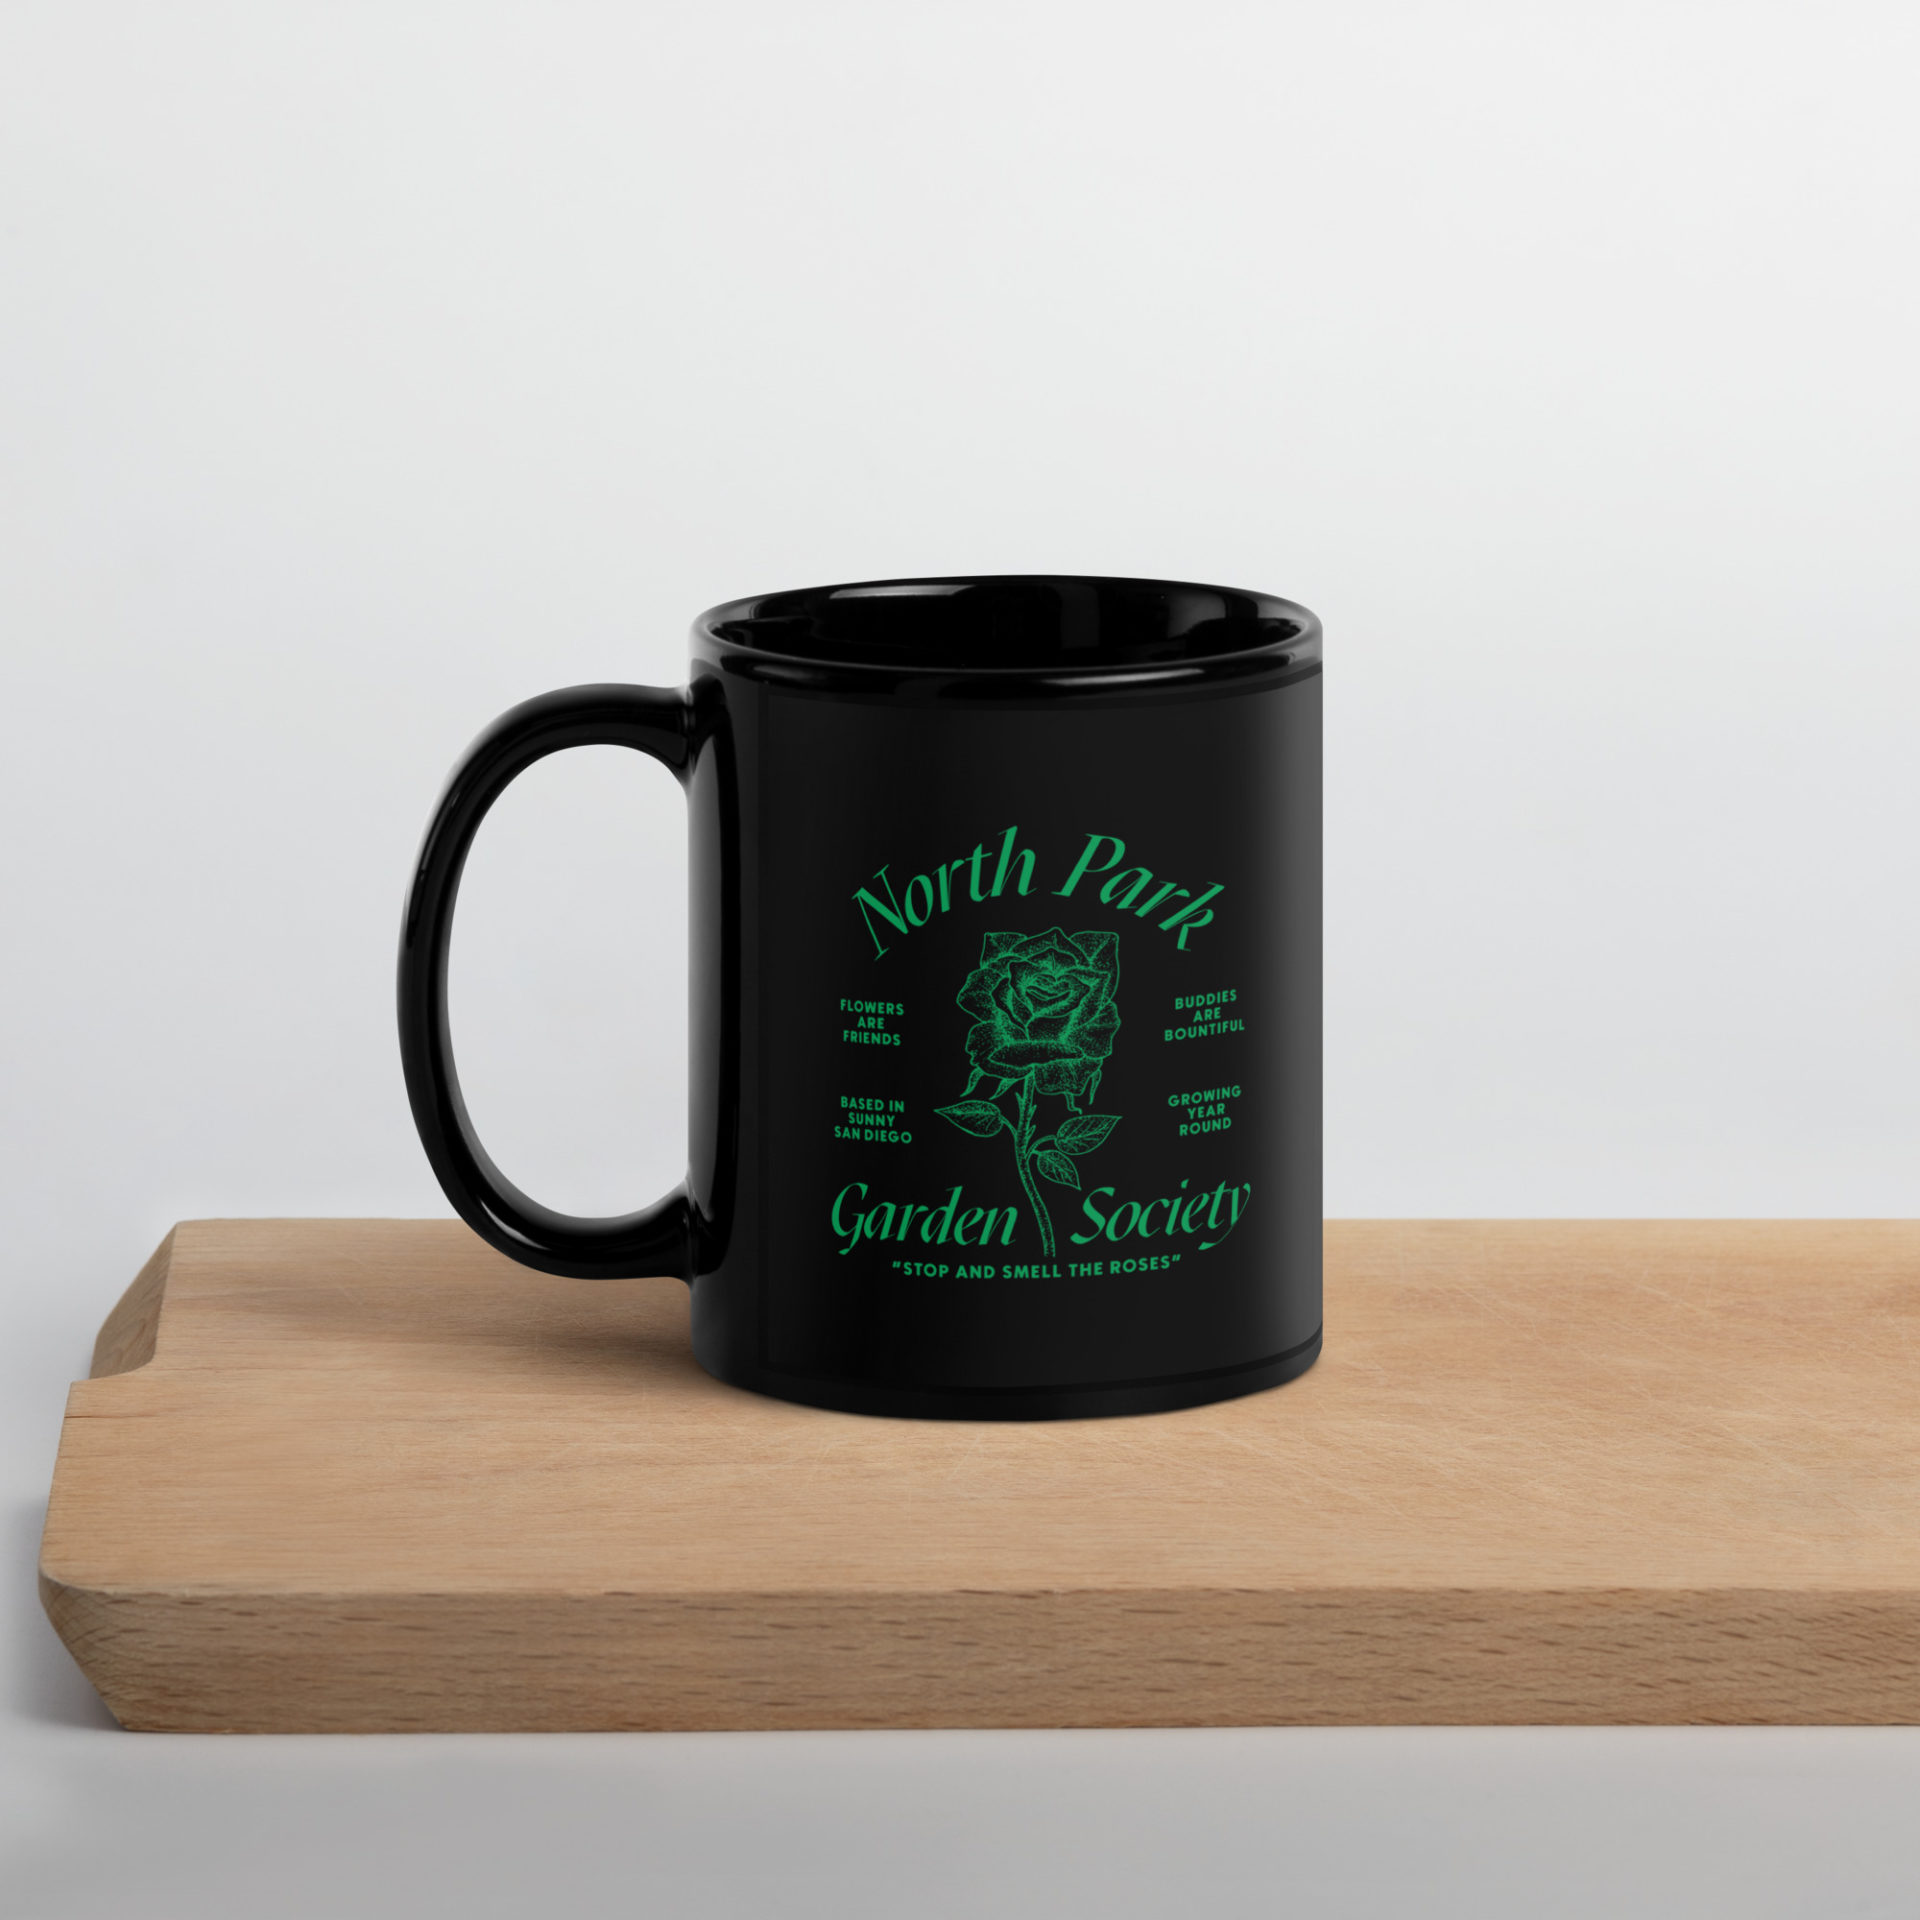 Garden Society Mug 